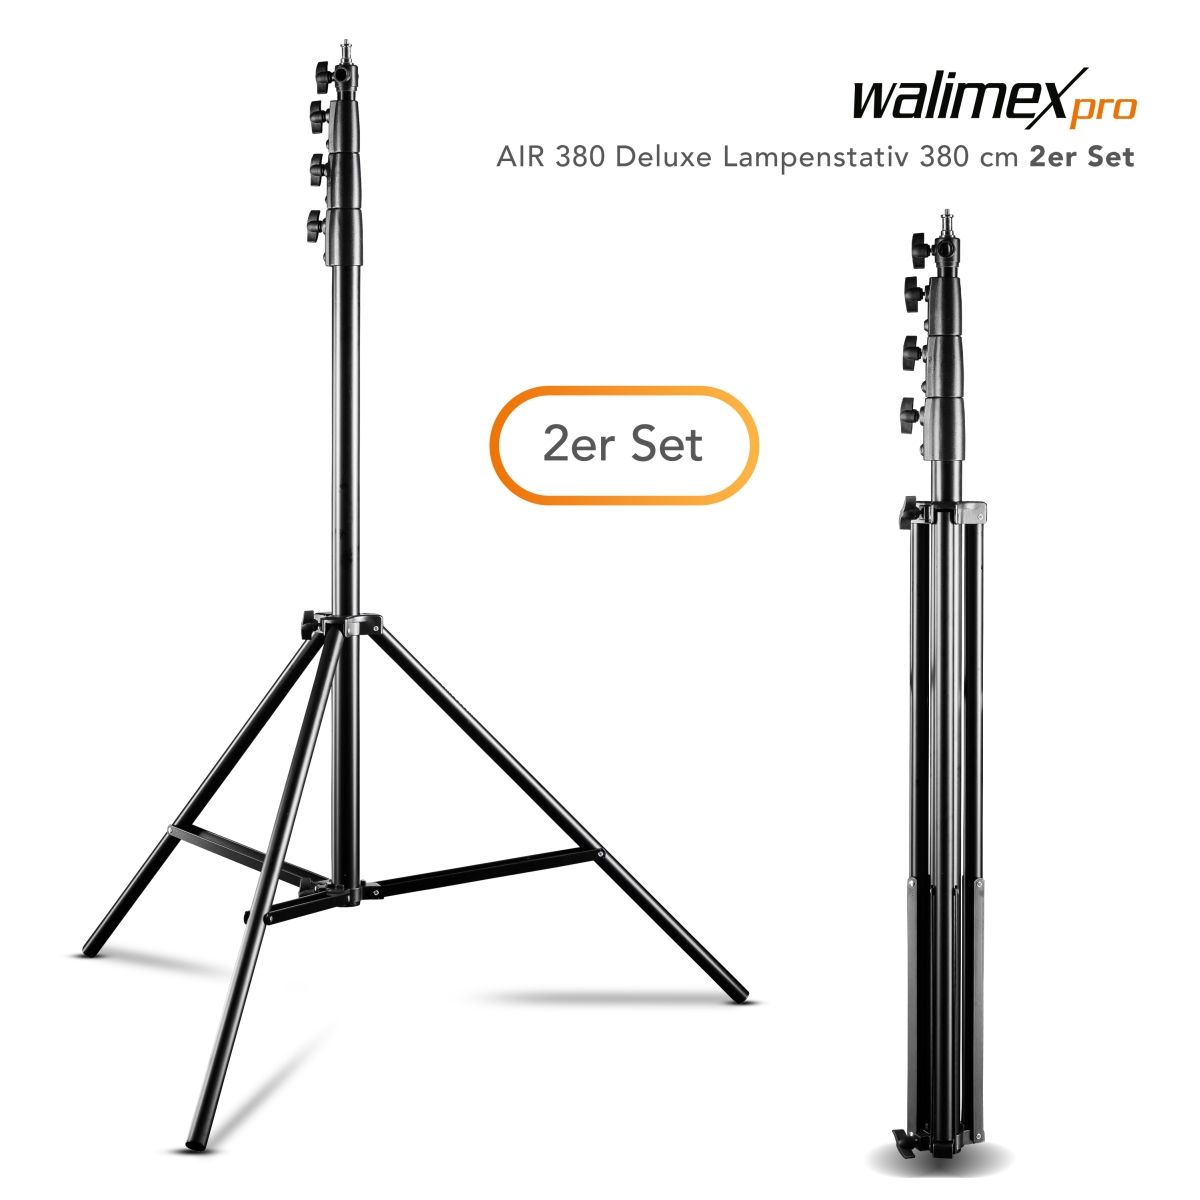 Walimex pro AIR 380 Deluxe Lampenst. 380cm 2er Set